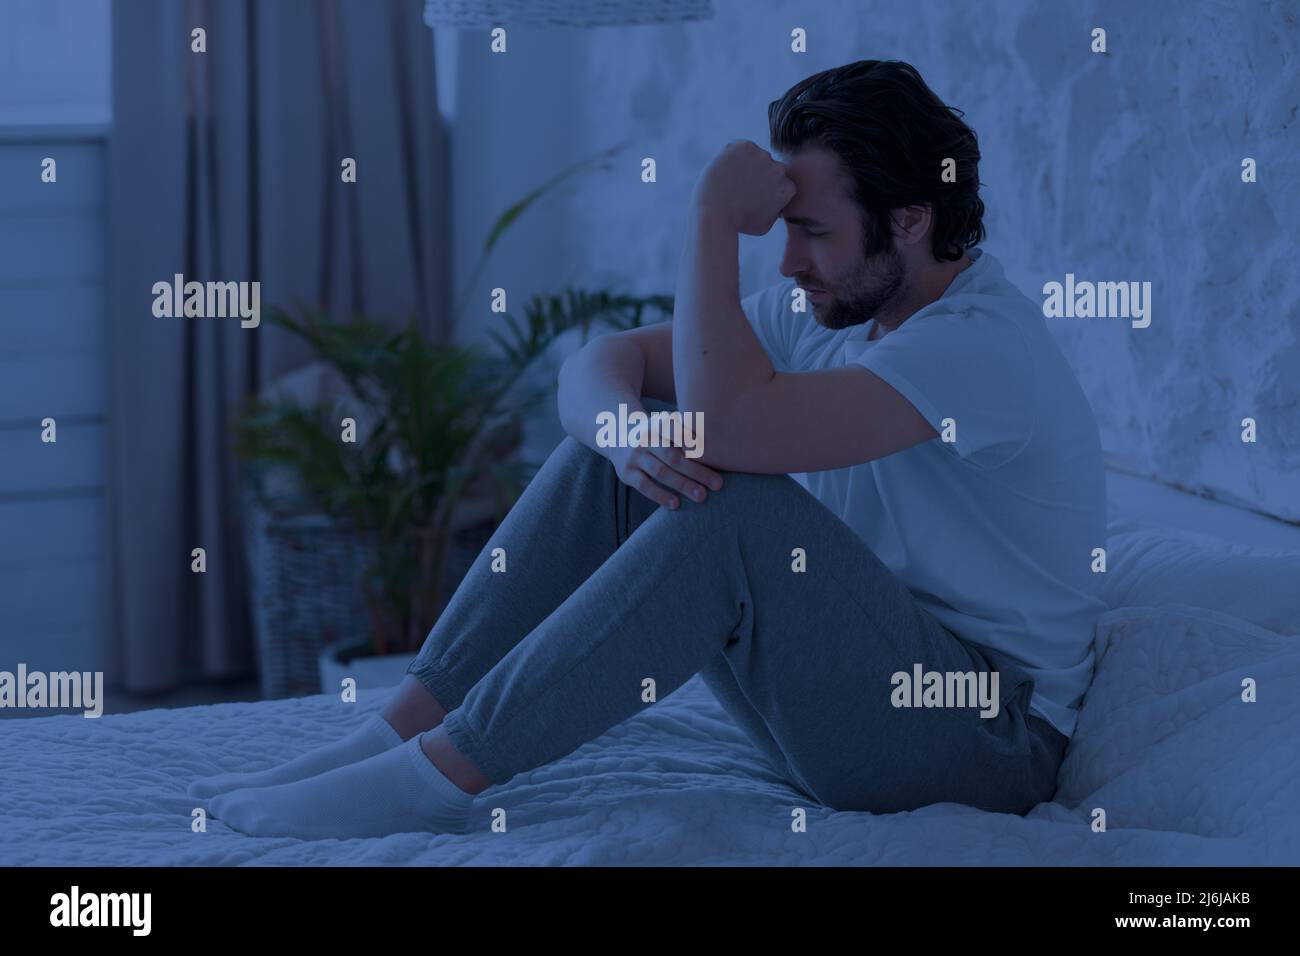 Sleepless millennial man feeling down at night, bedroom interior Stock Photo